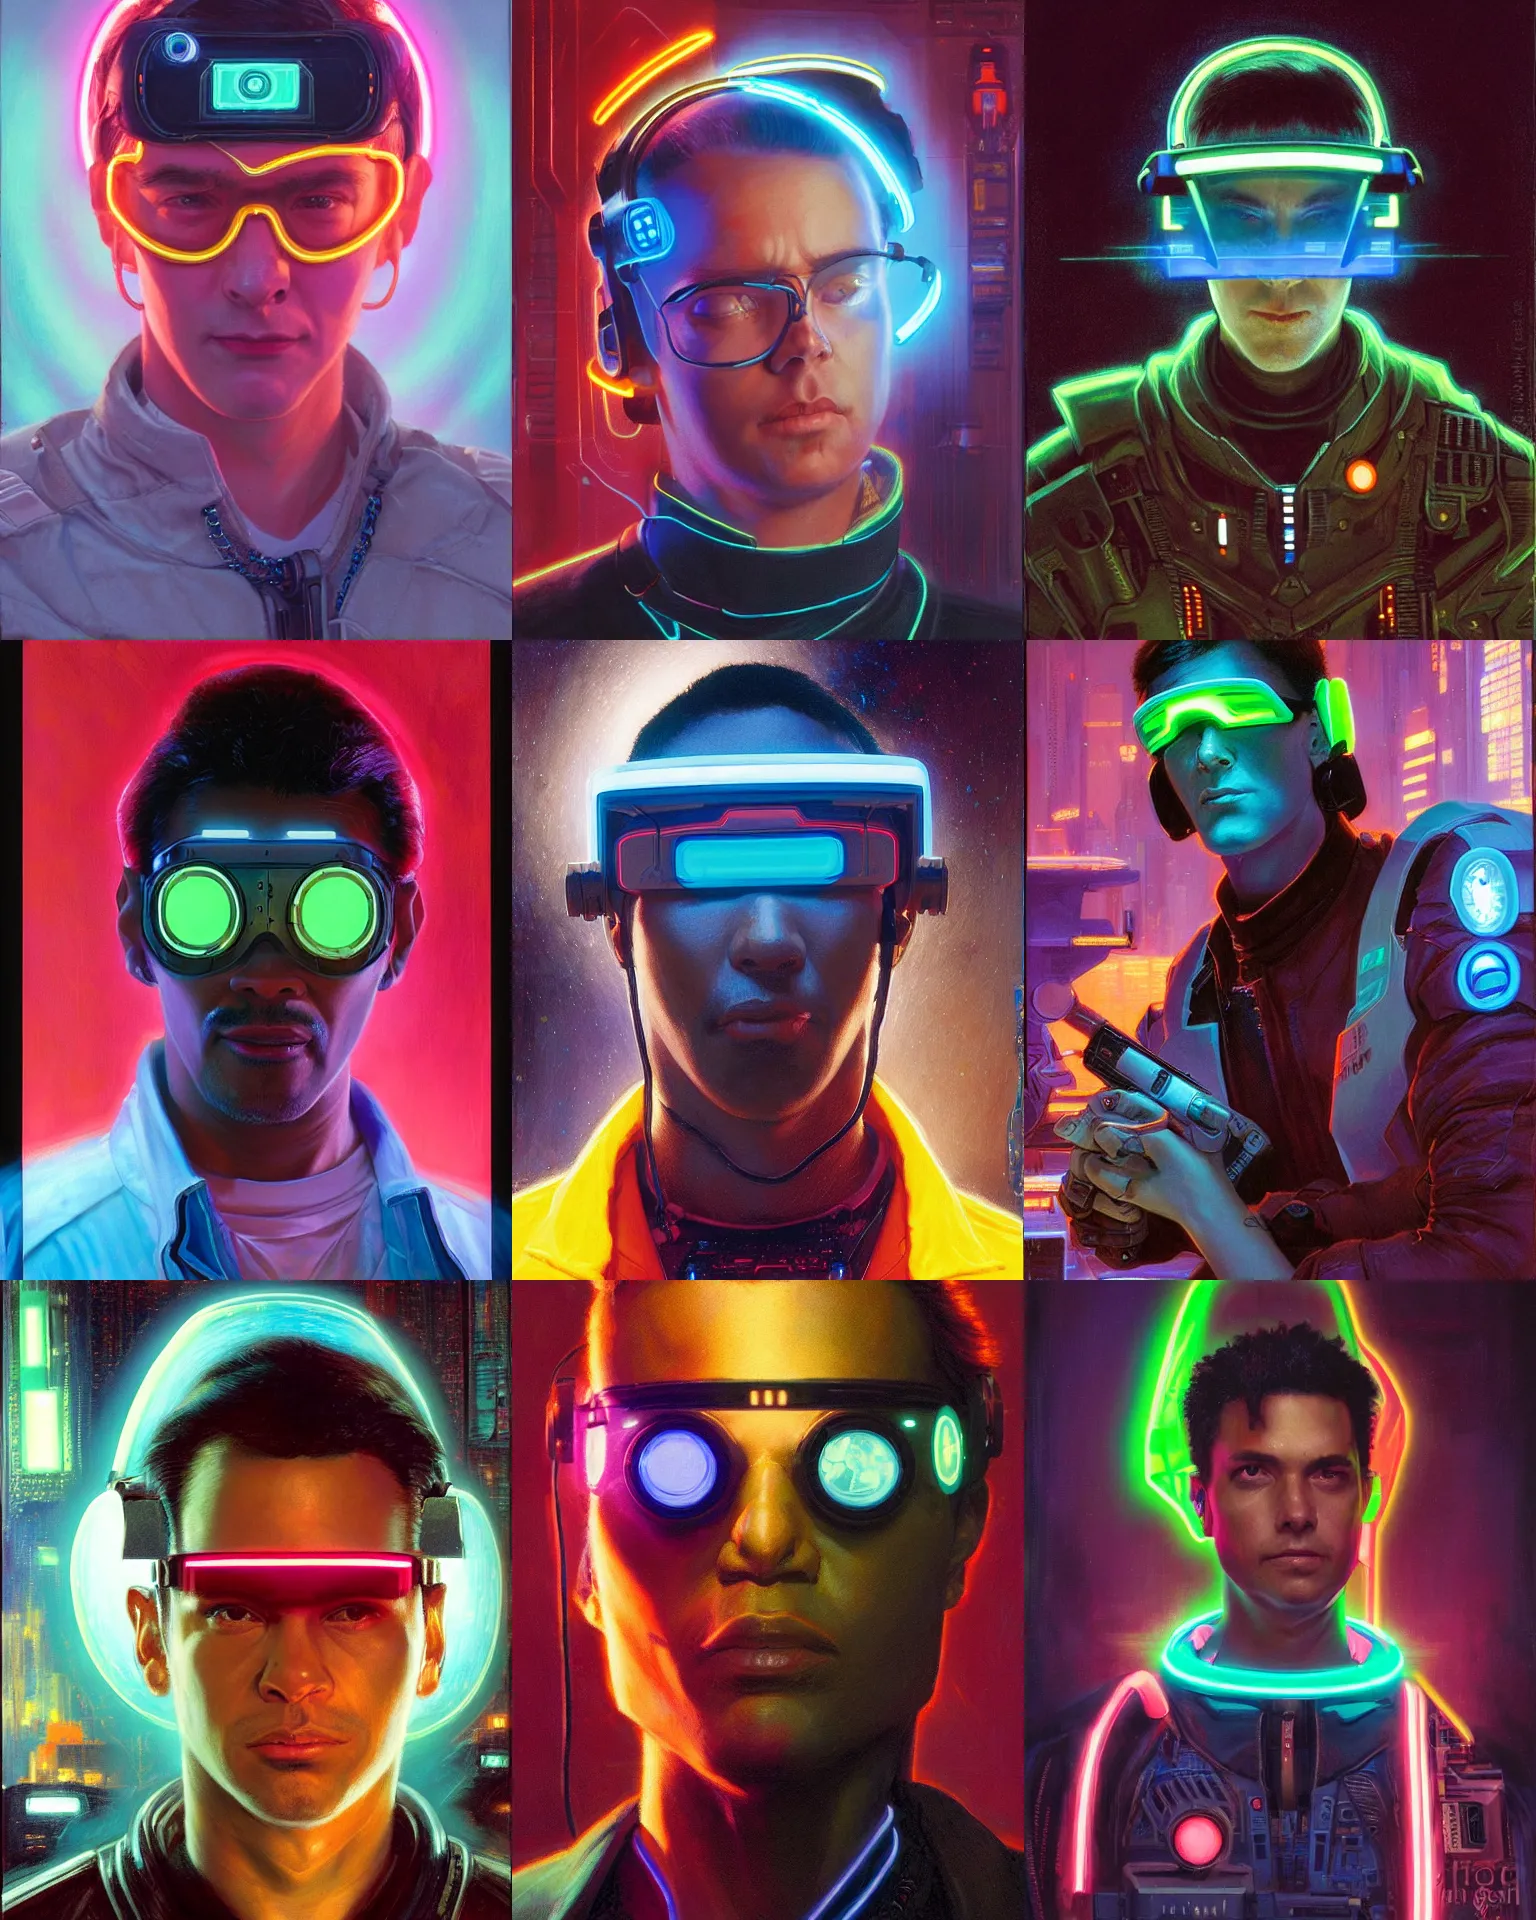 Prompt: neon cyberpunk programmer with glowing geordi visor and headset headshot portrait painting by donato giancola, kilian eng, john berkley, hayao miyazaki, j. c. leyendecker, mead schaeffer fashion photography